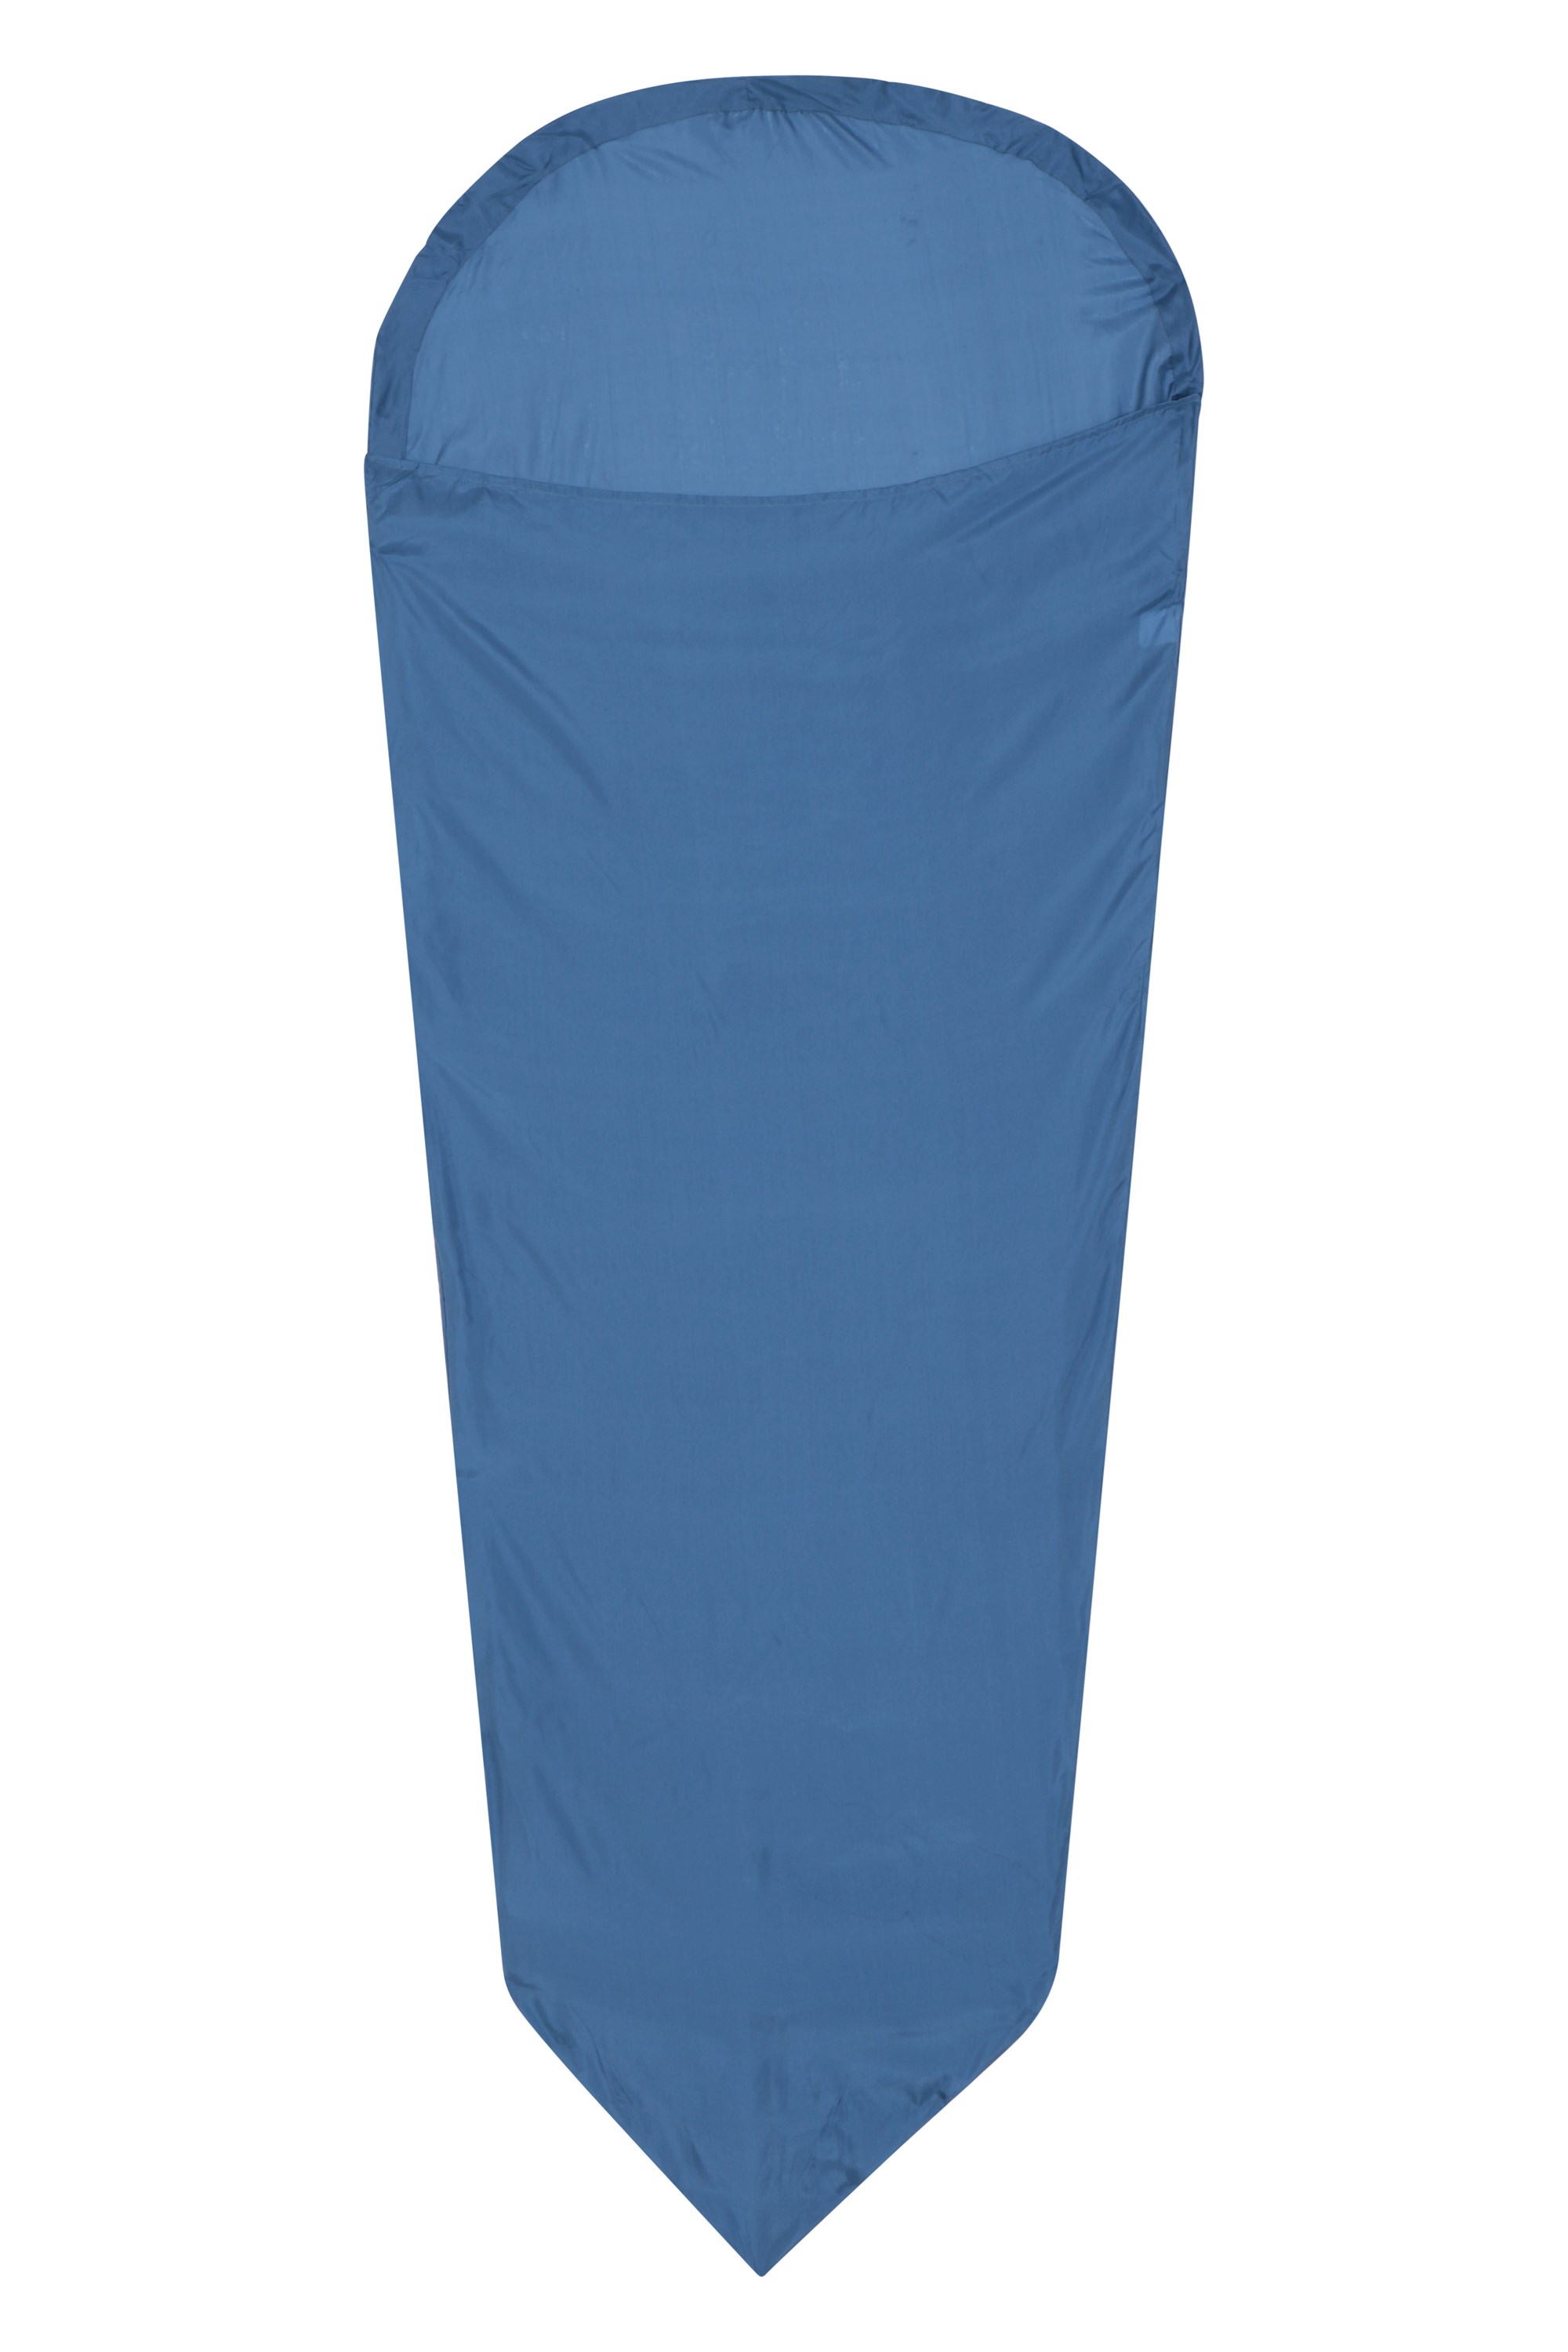 Mountain Warehouse Silk Sleeping bag Liner Fleece Liner Great Condition  